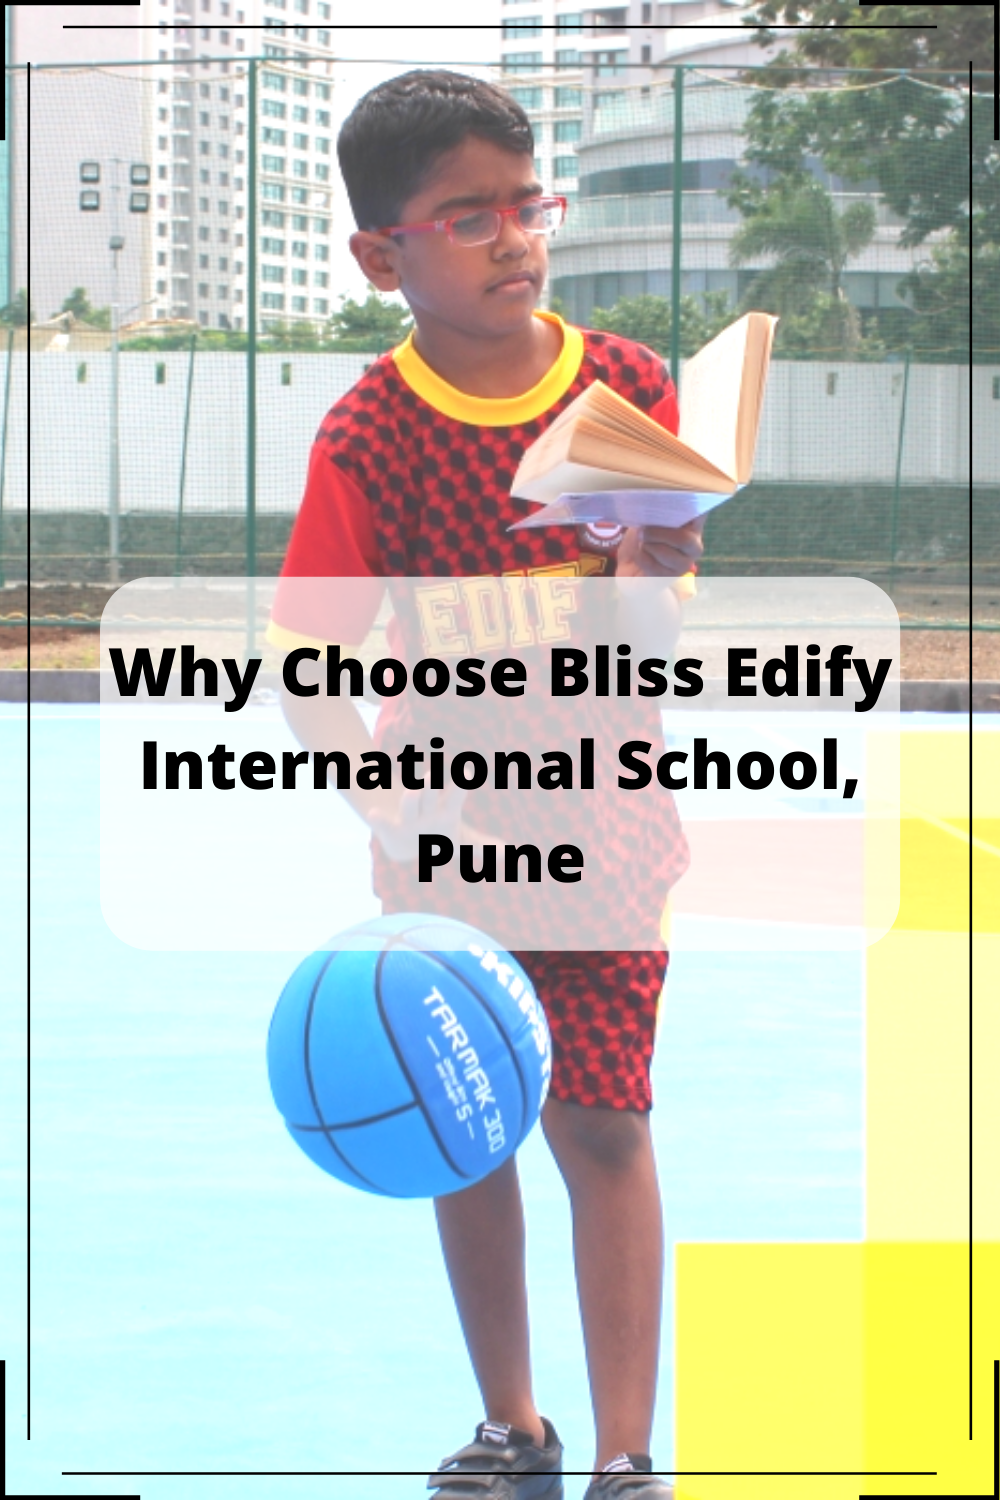 bliss edify international school pune